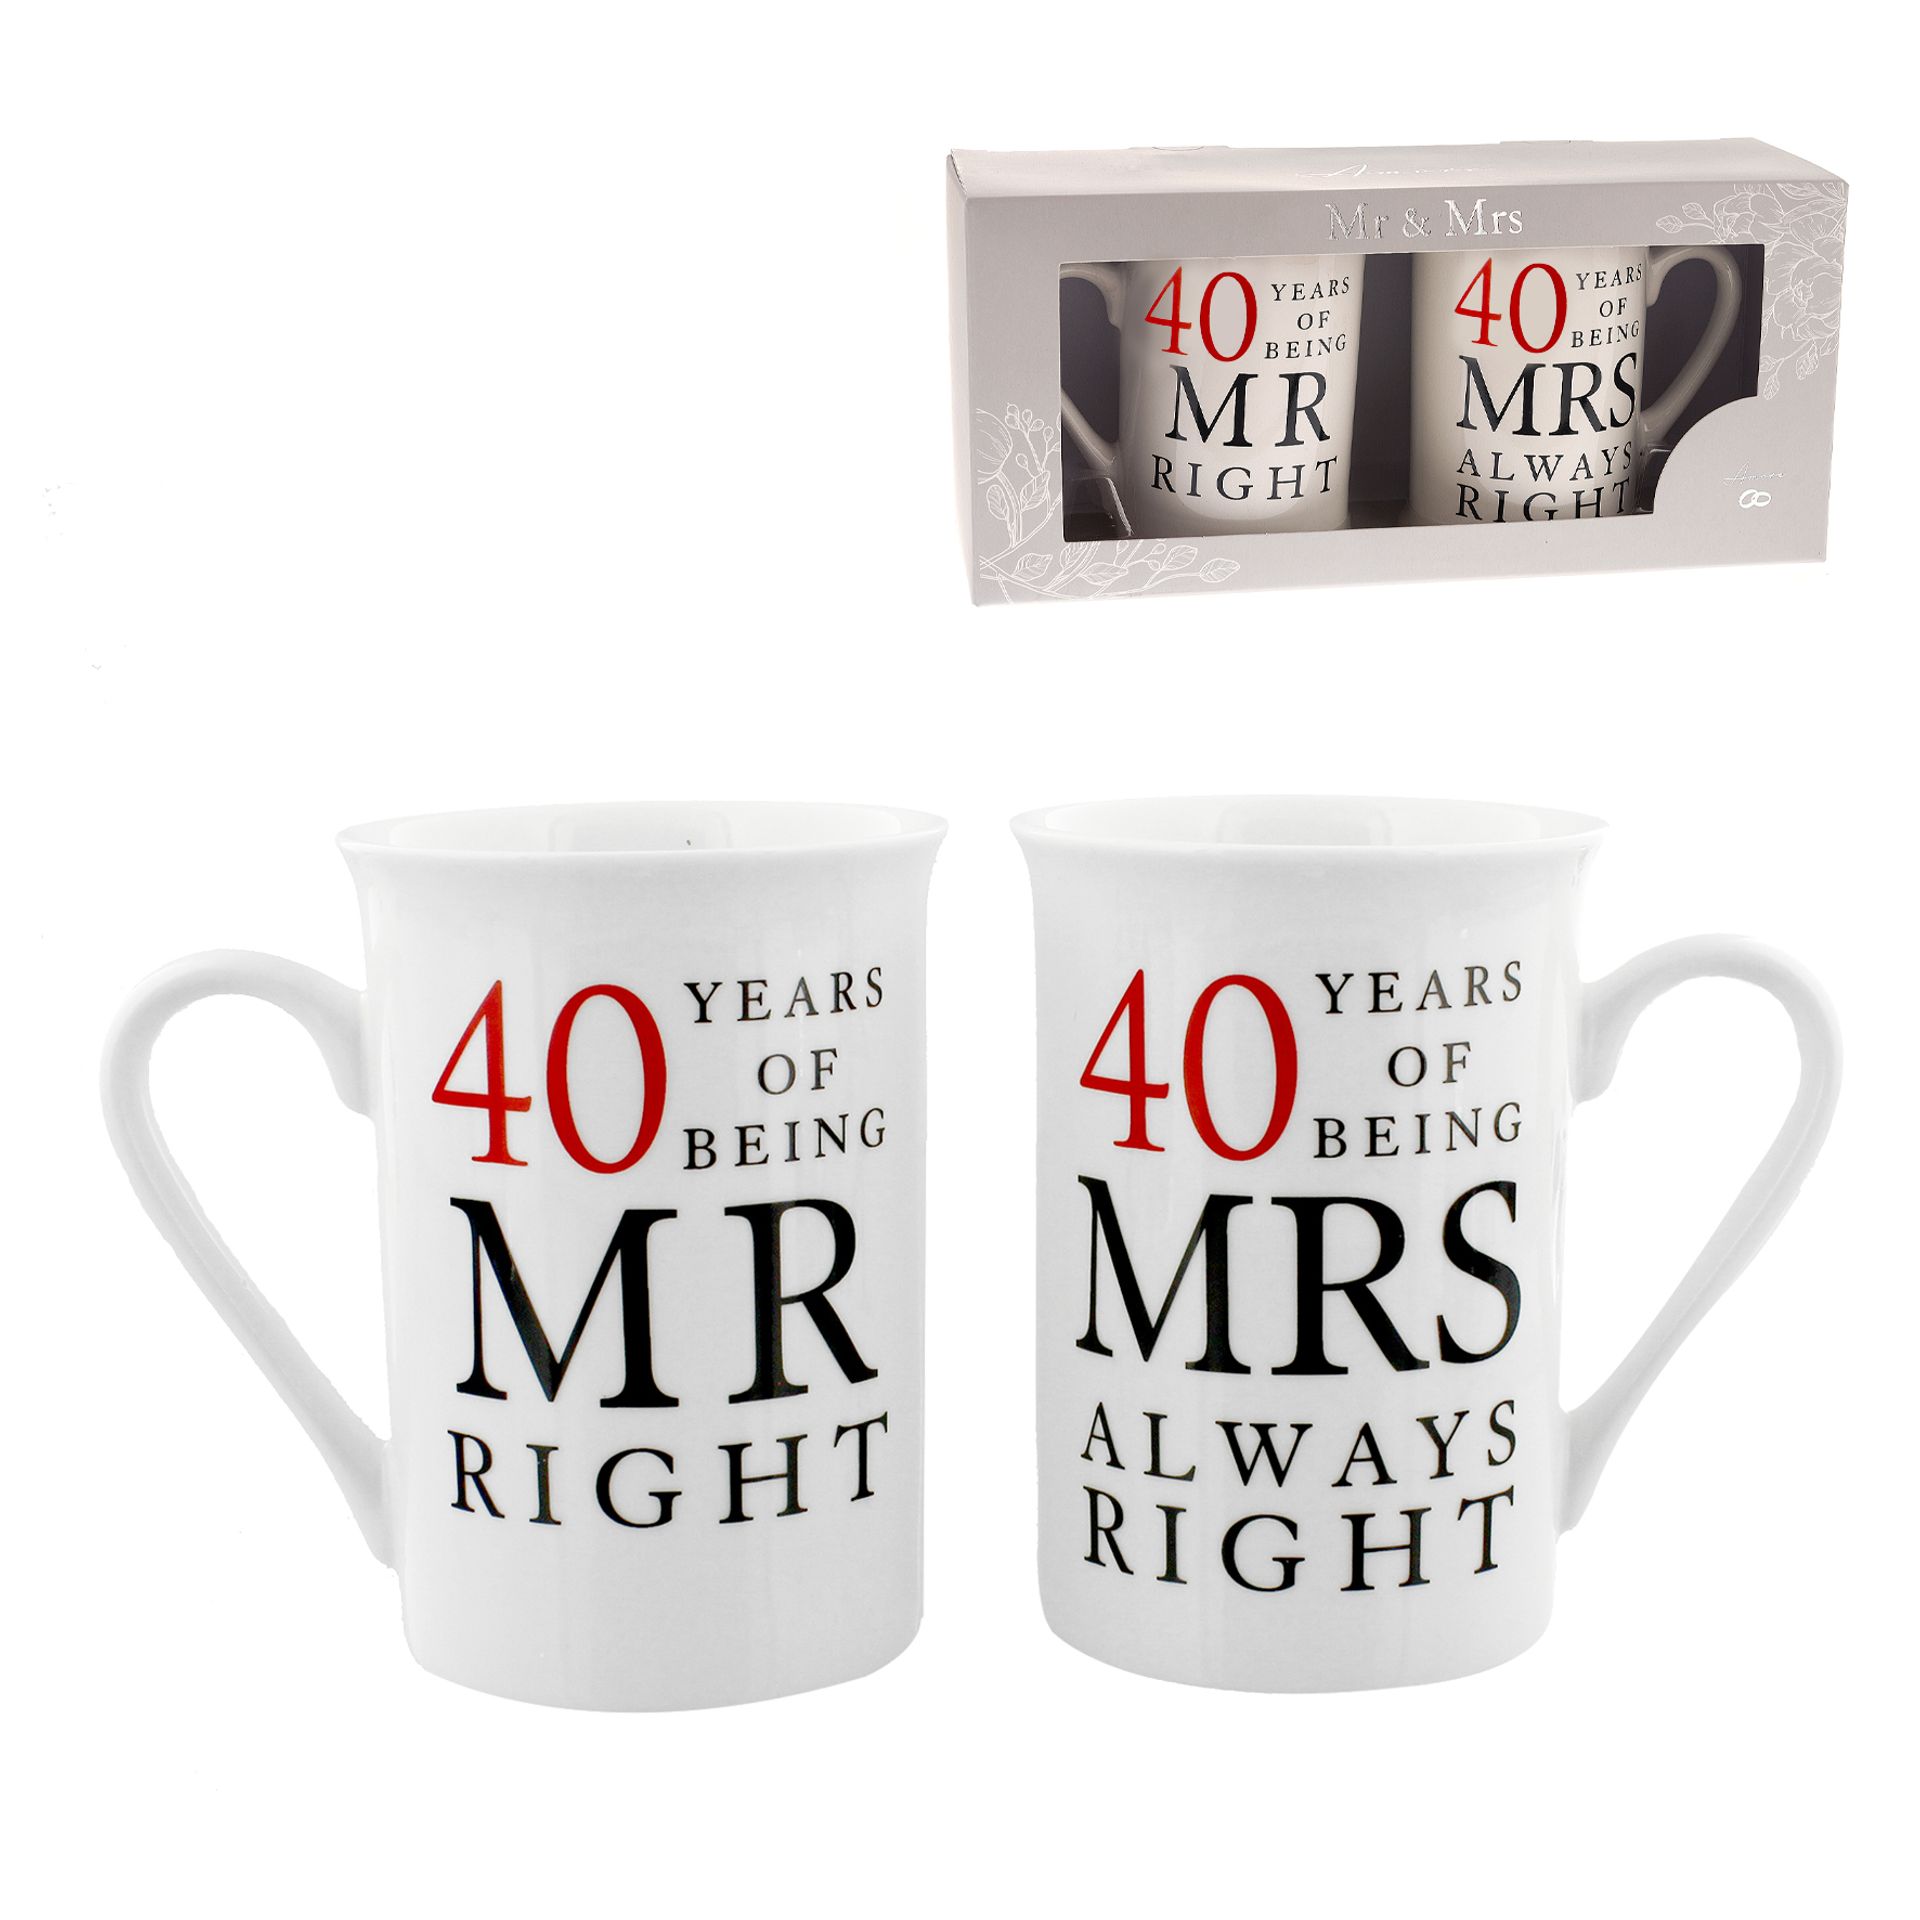 Widdop 40th Wedding Anniversary Mr and Mrs Right Mugs